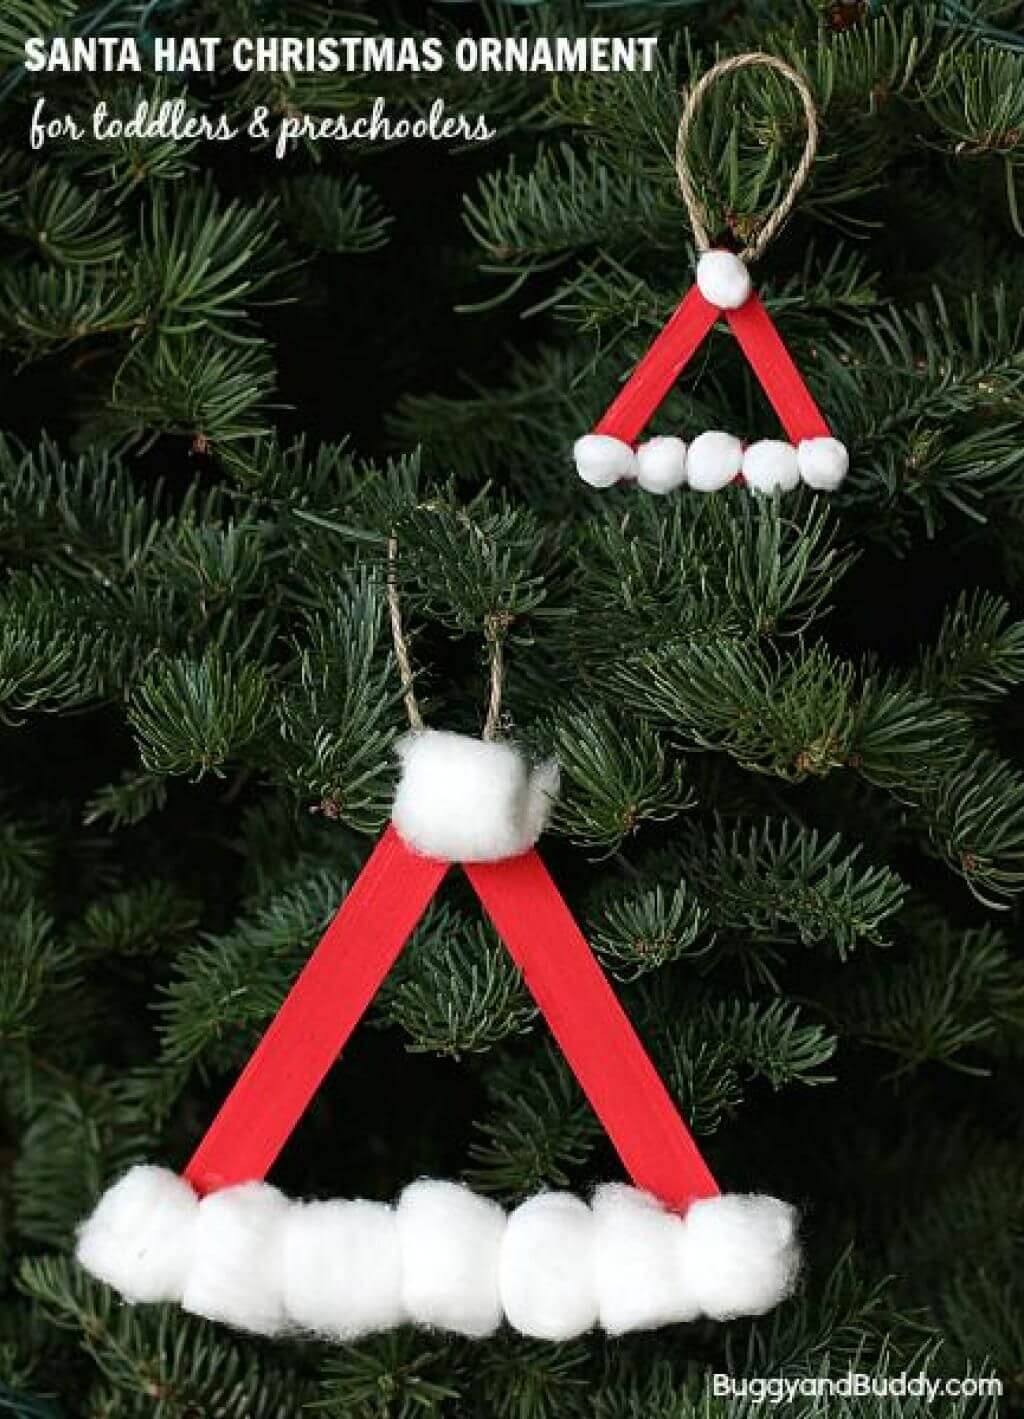 Adorable Popsicle Stick and Cotton Santa Ornaments